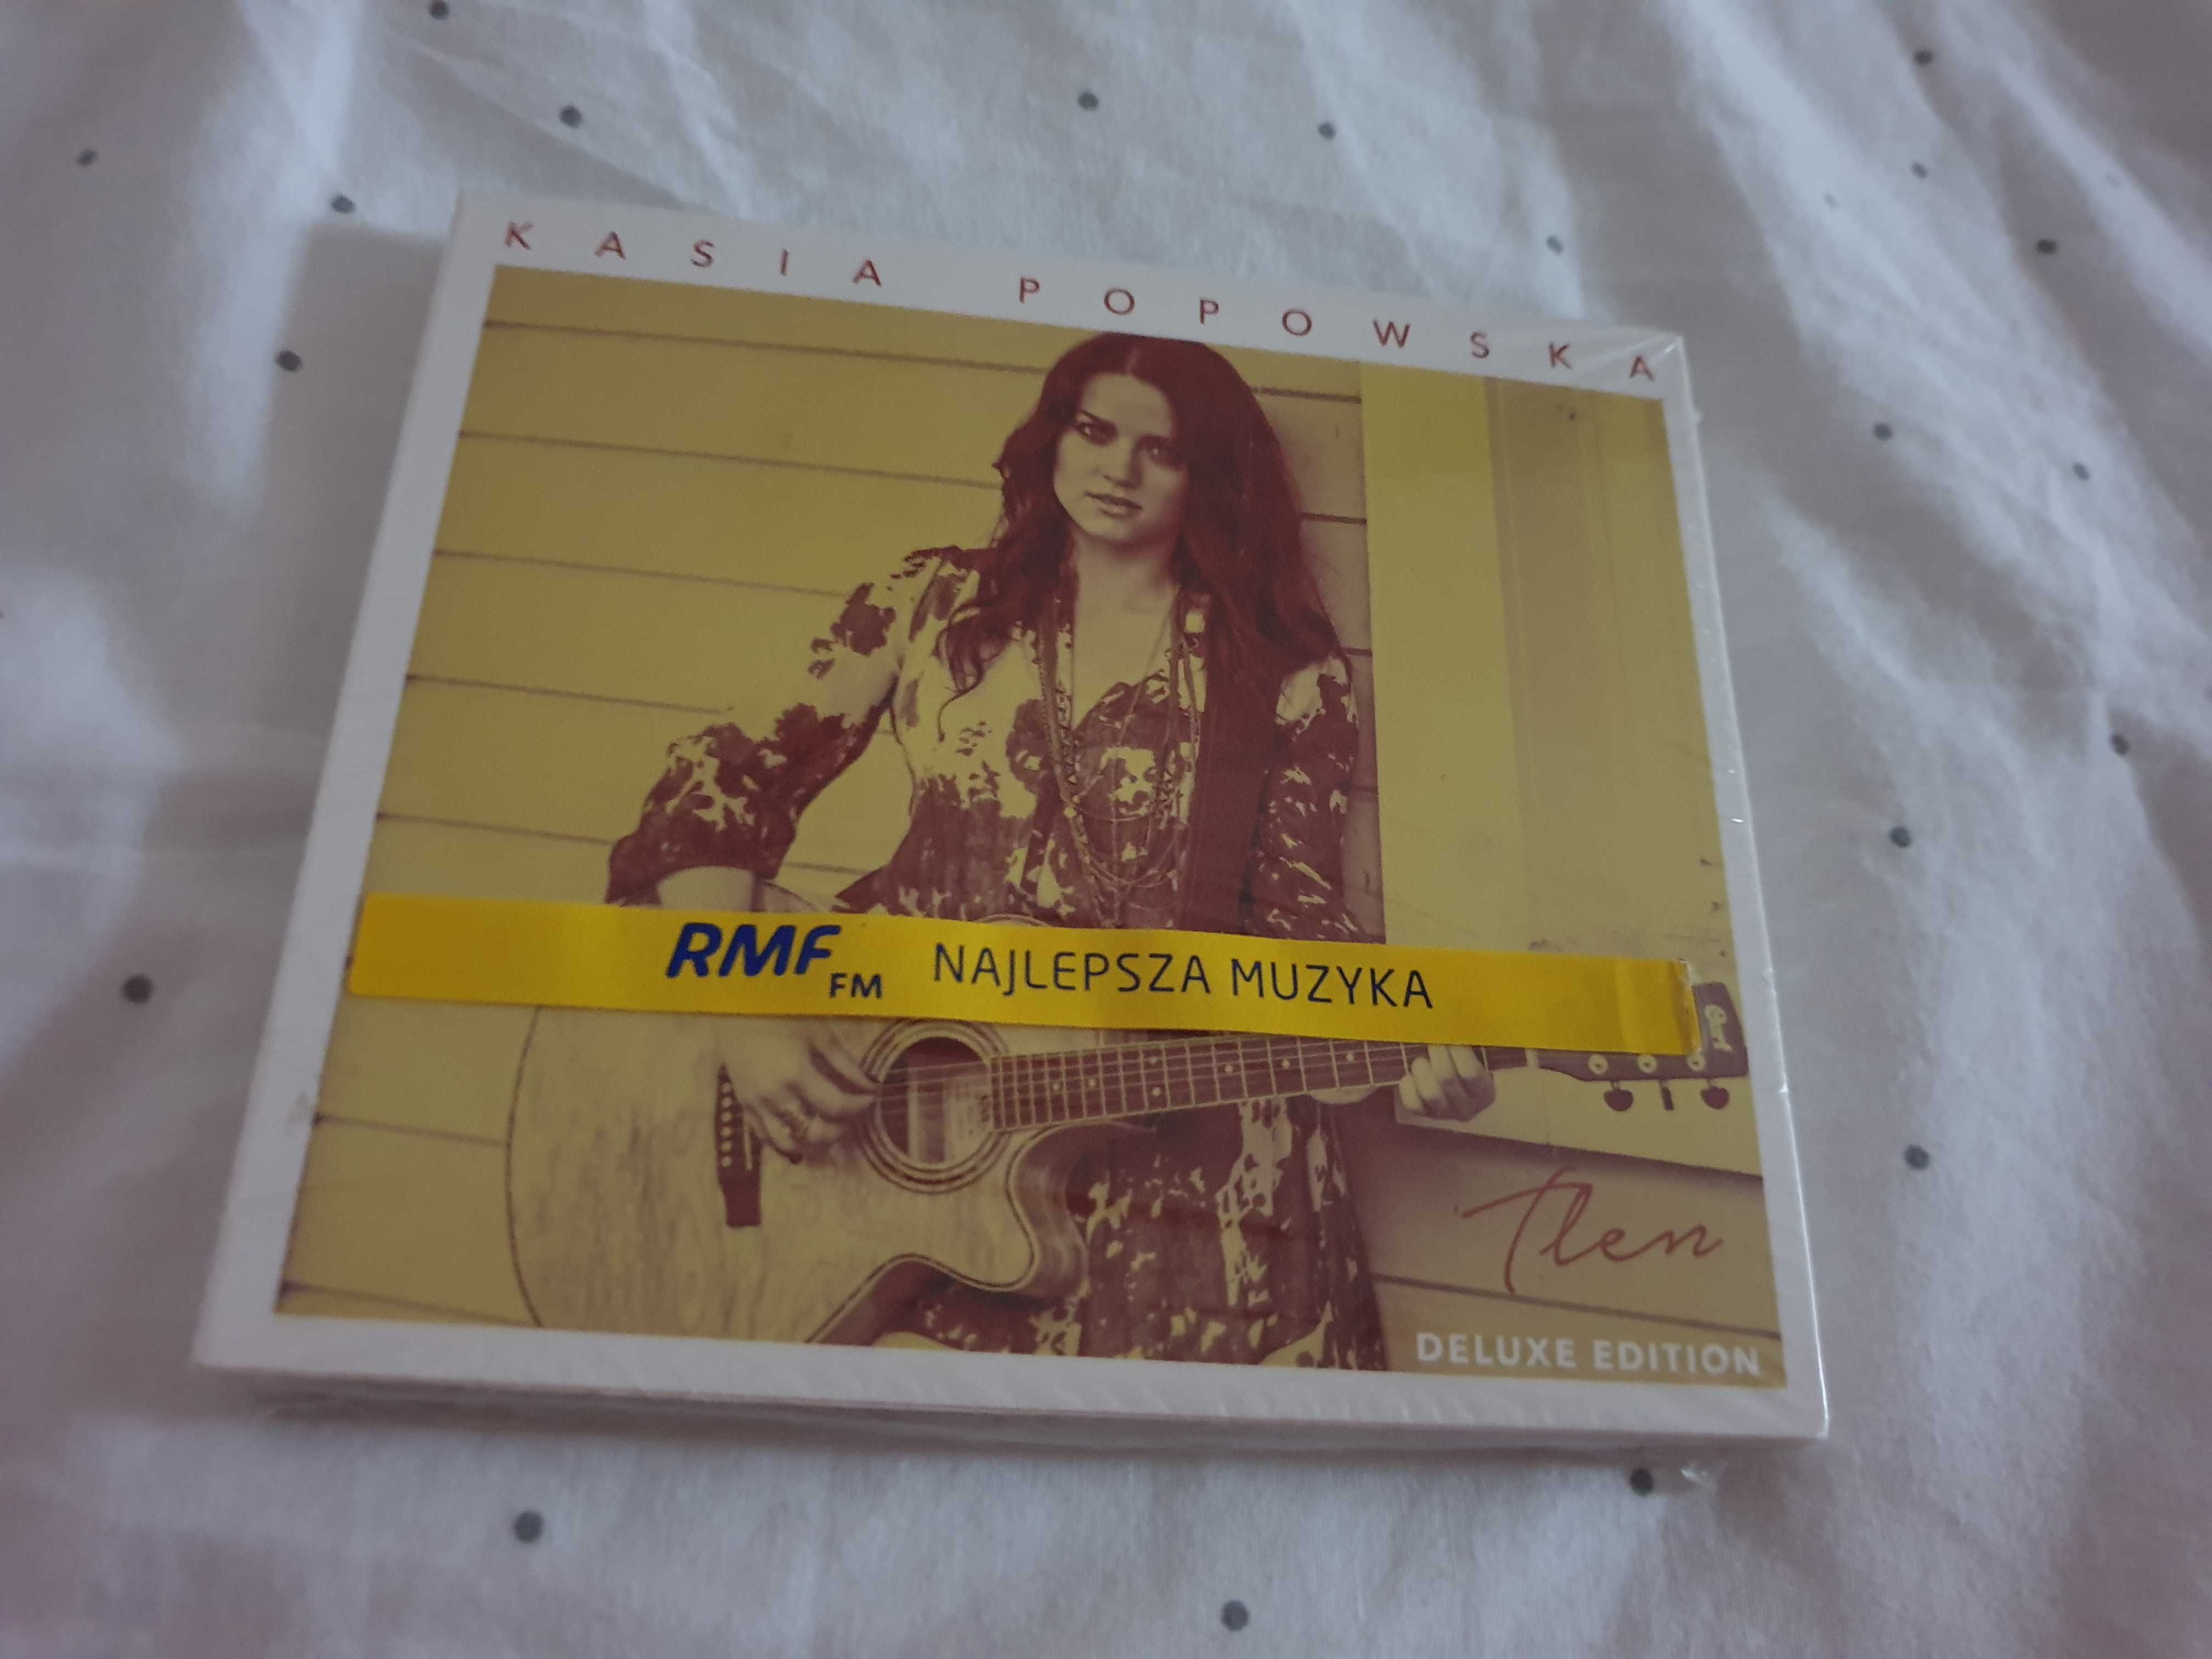 Kasia Popowska. Tlen . Deluxe Edition. Nowa CD